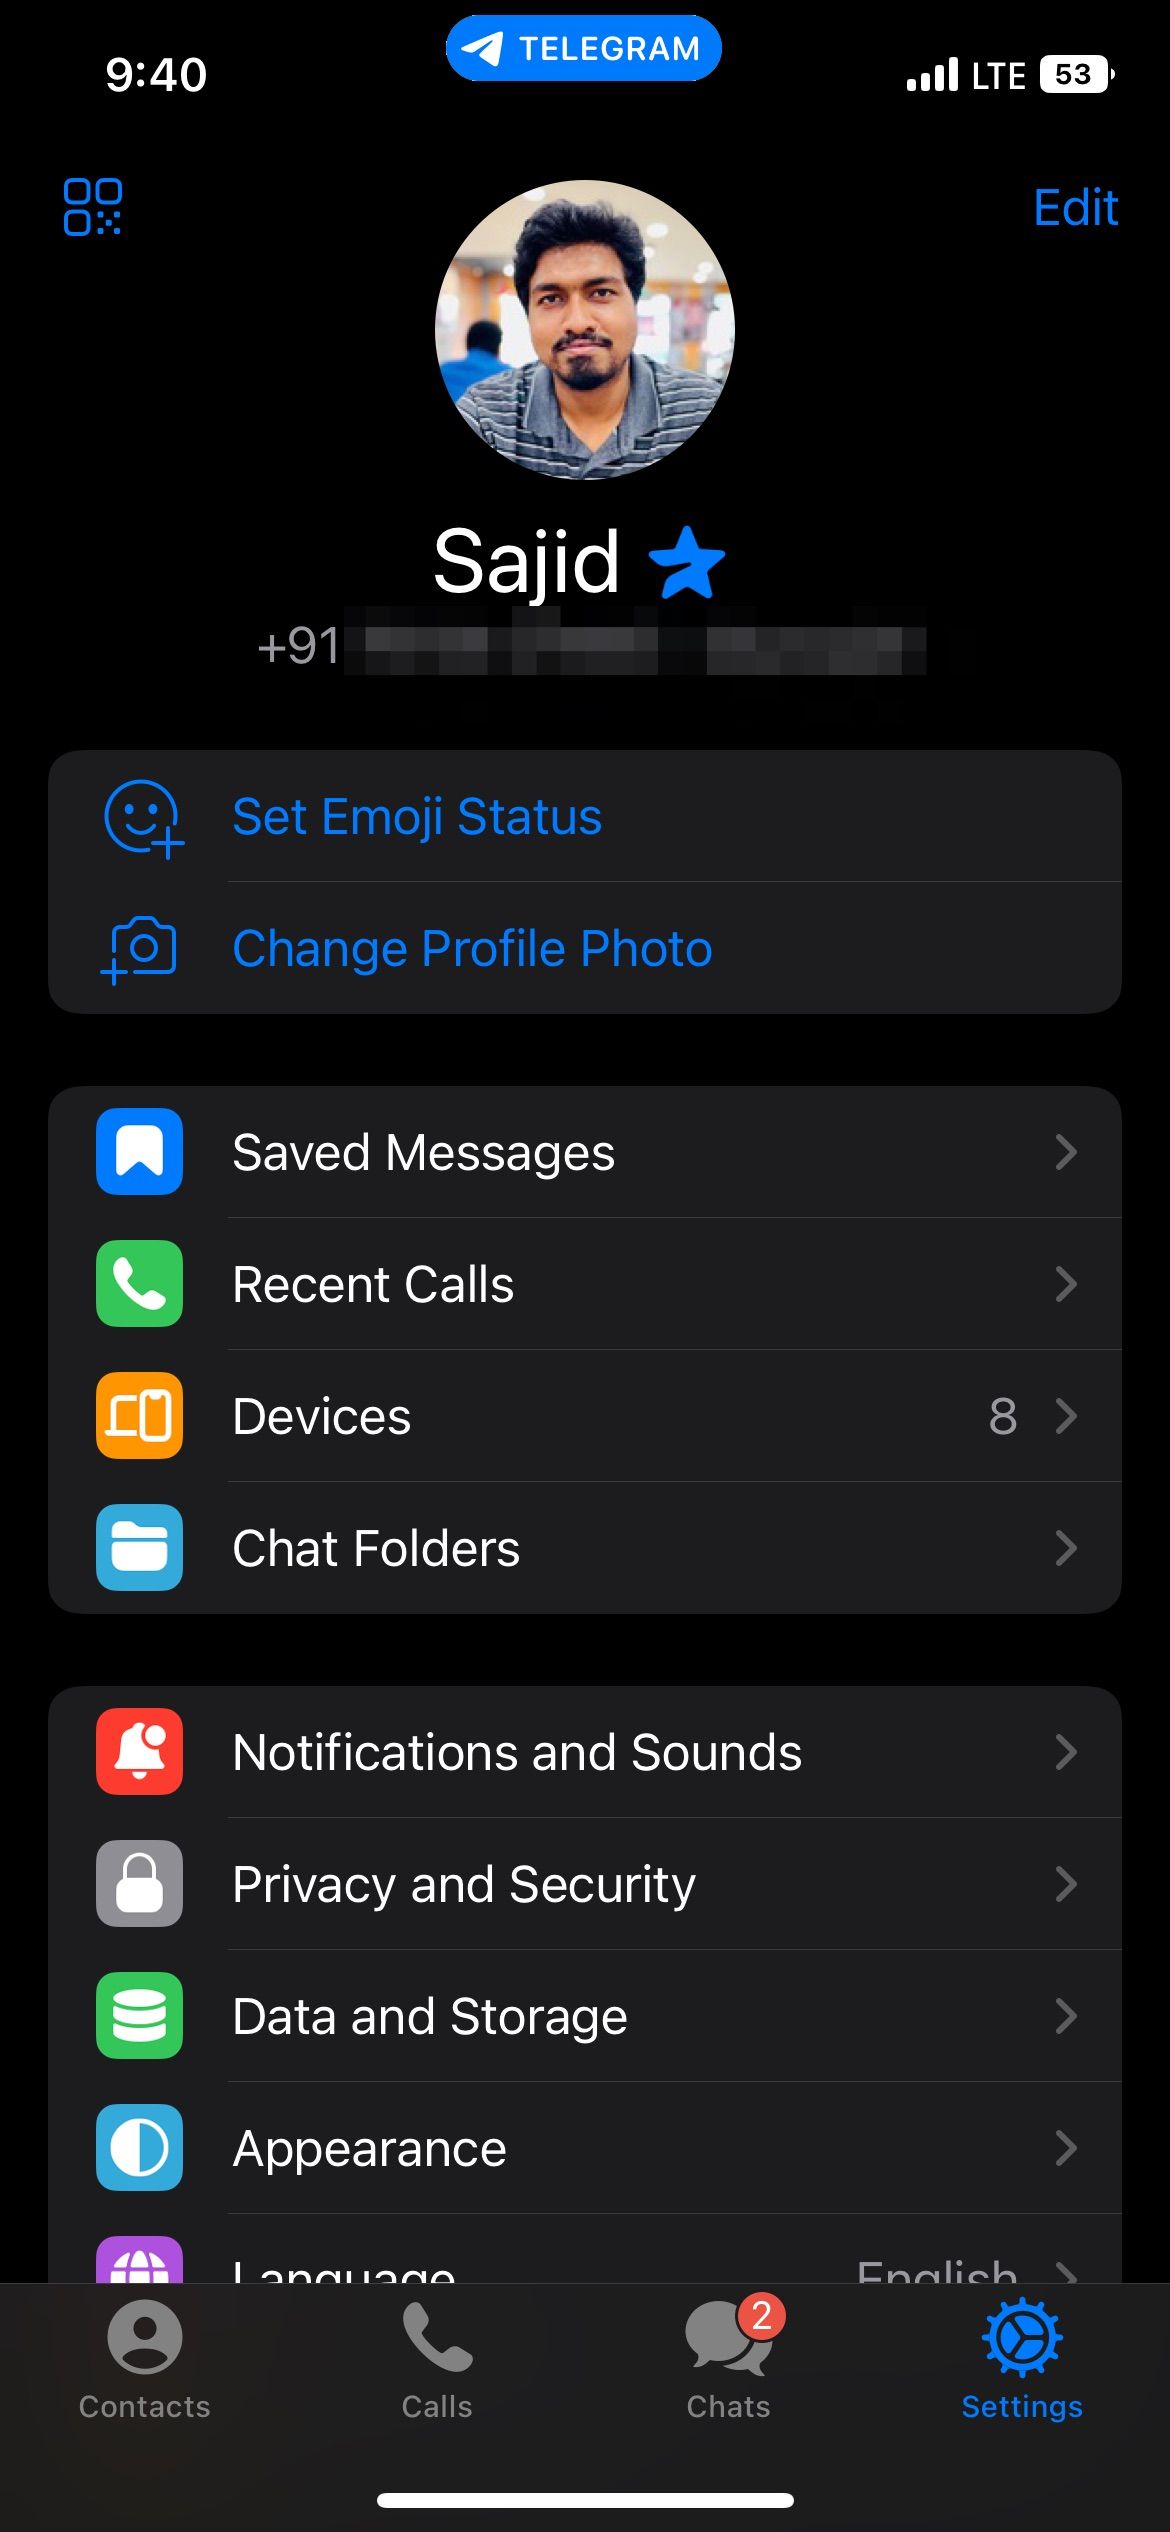 Telegram app settings on iOS